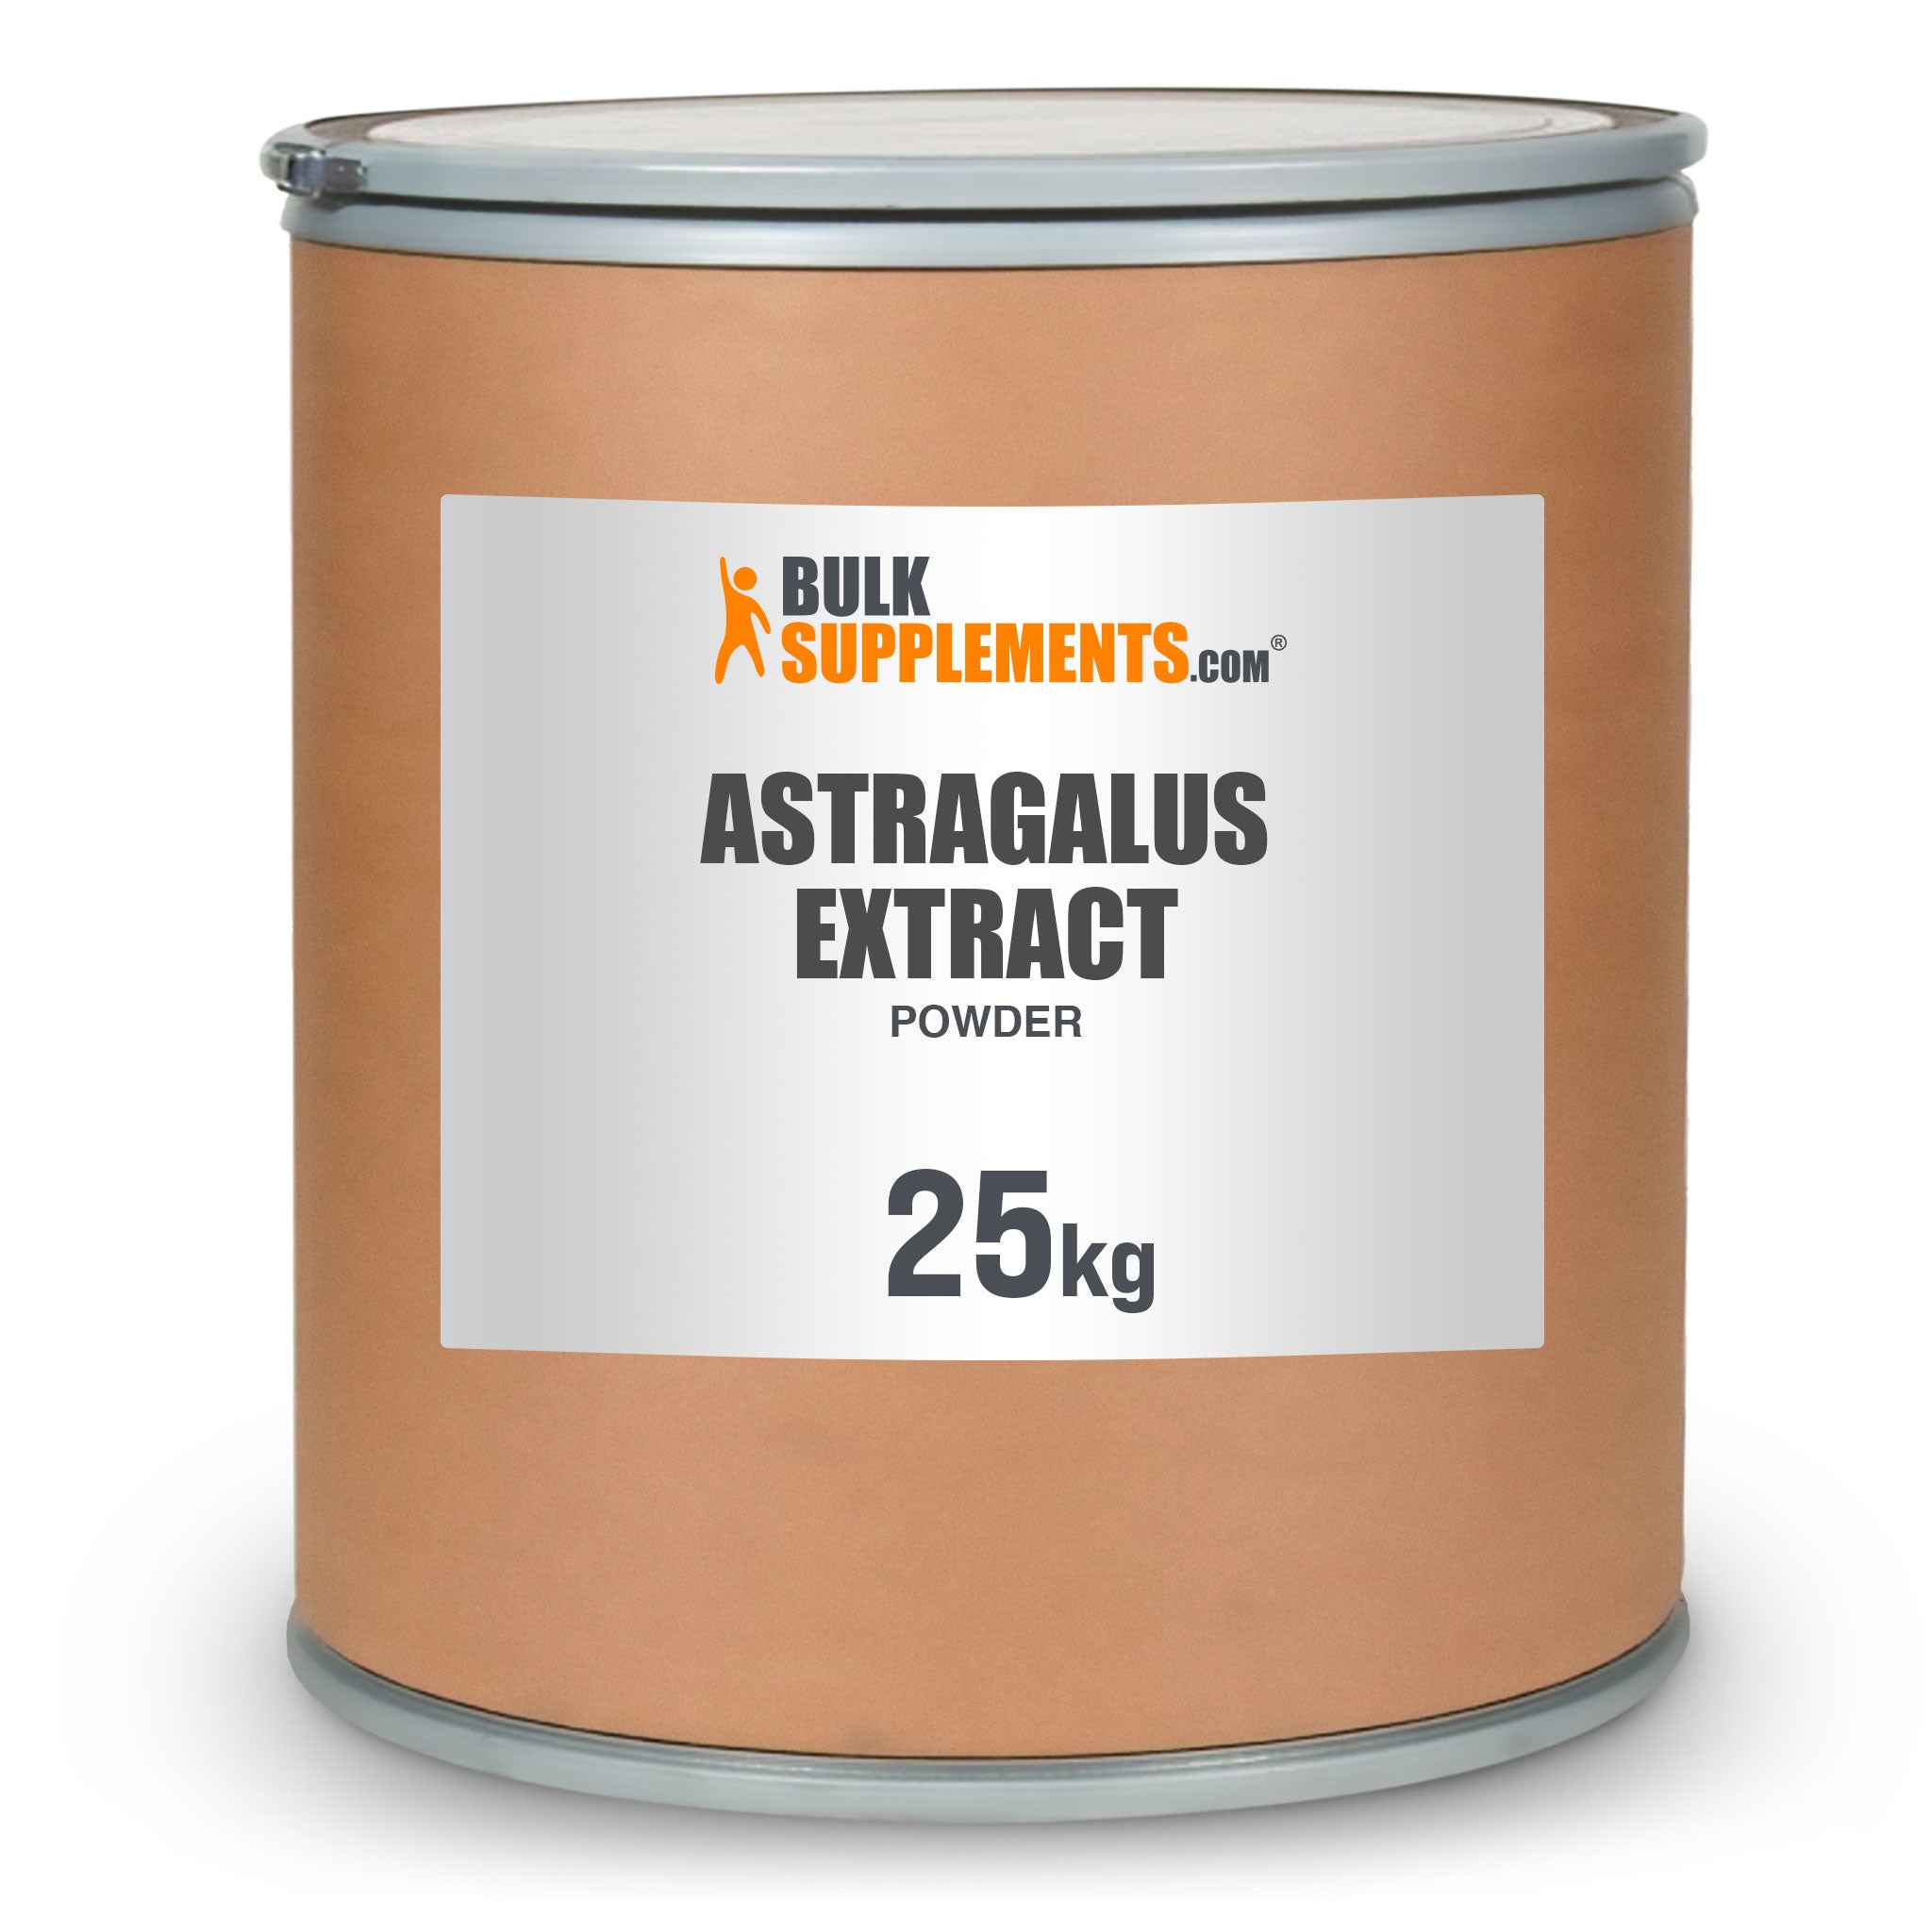 Bulk Astragalus Extract